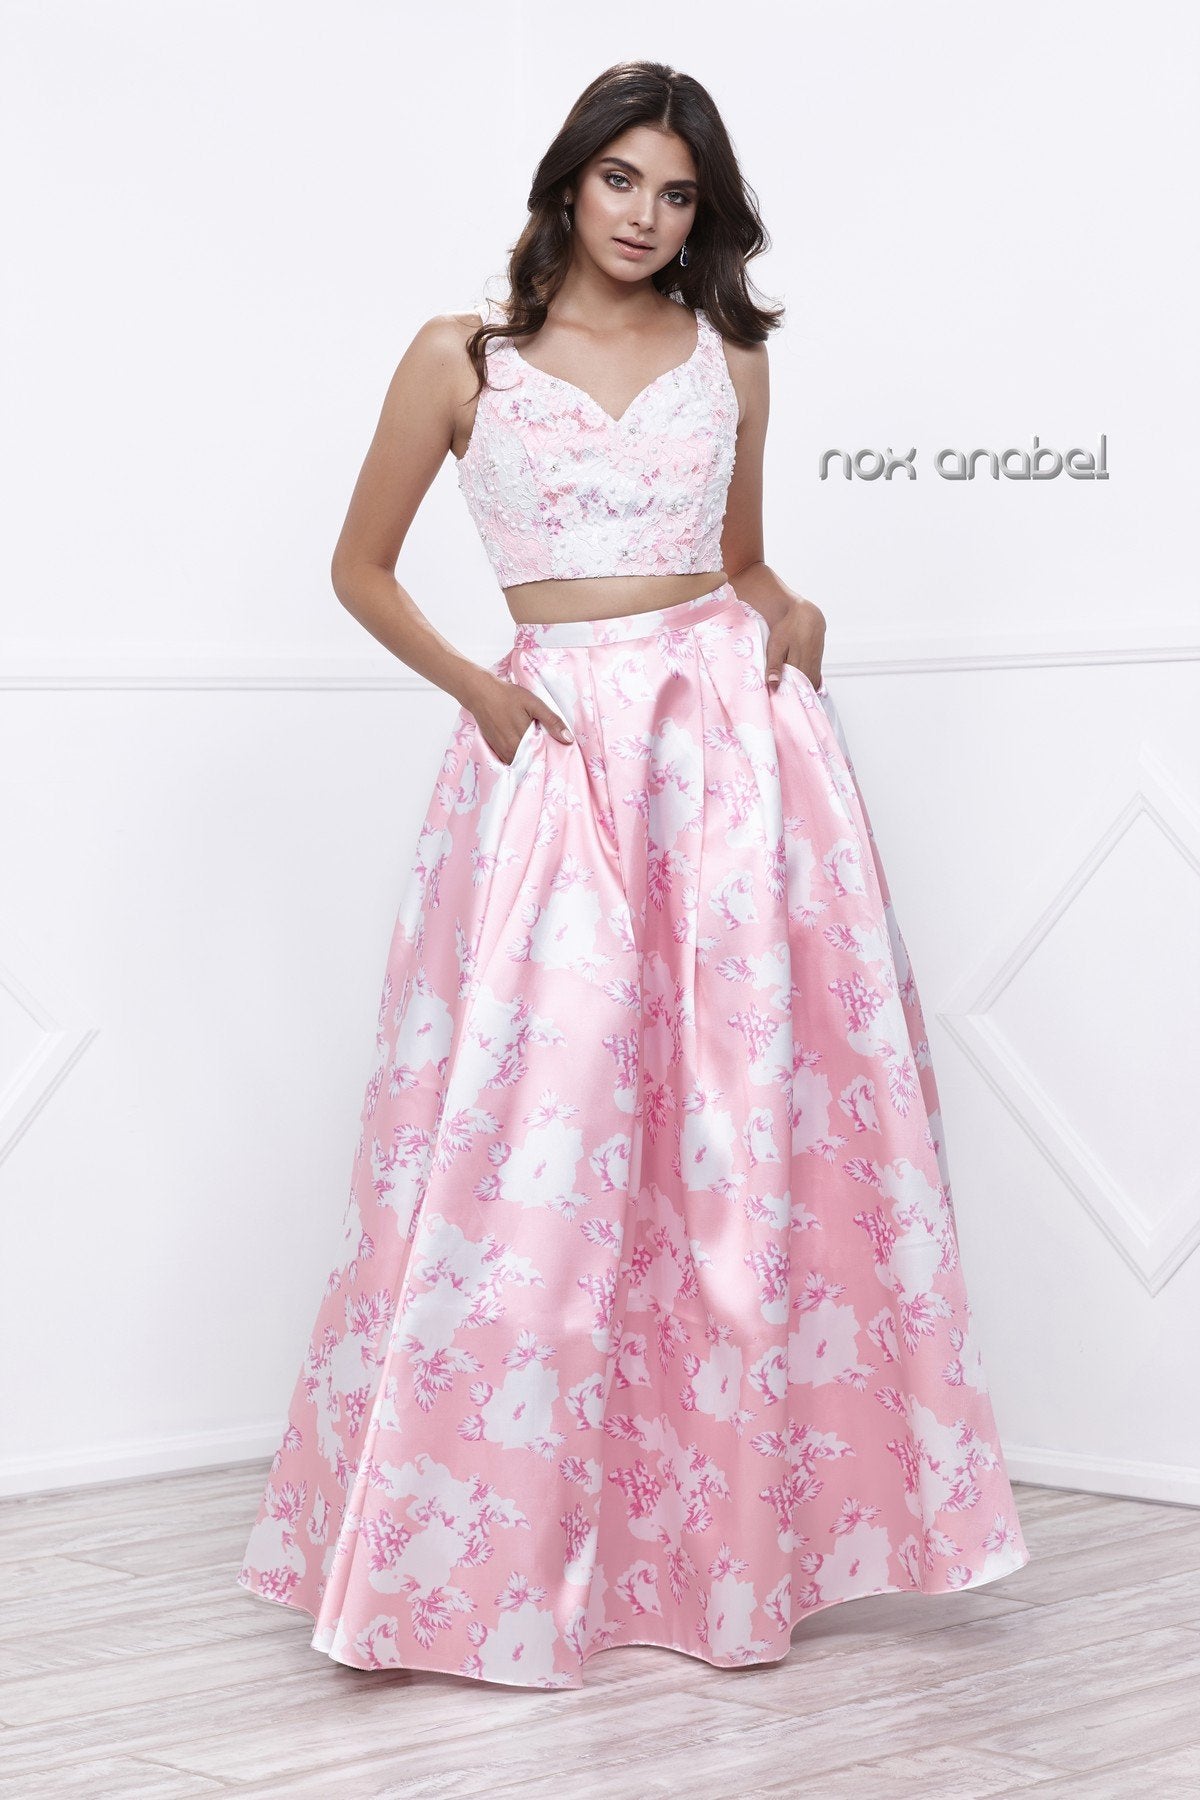 Floral Patterned Glitter Tulle with Split Skirt Overlay